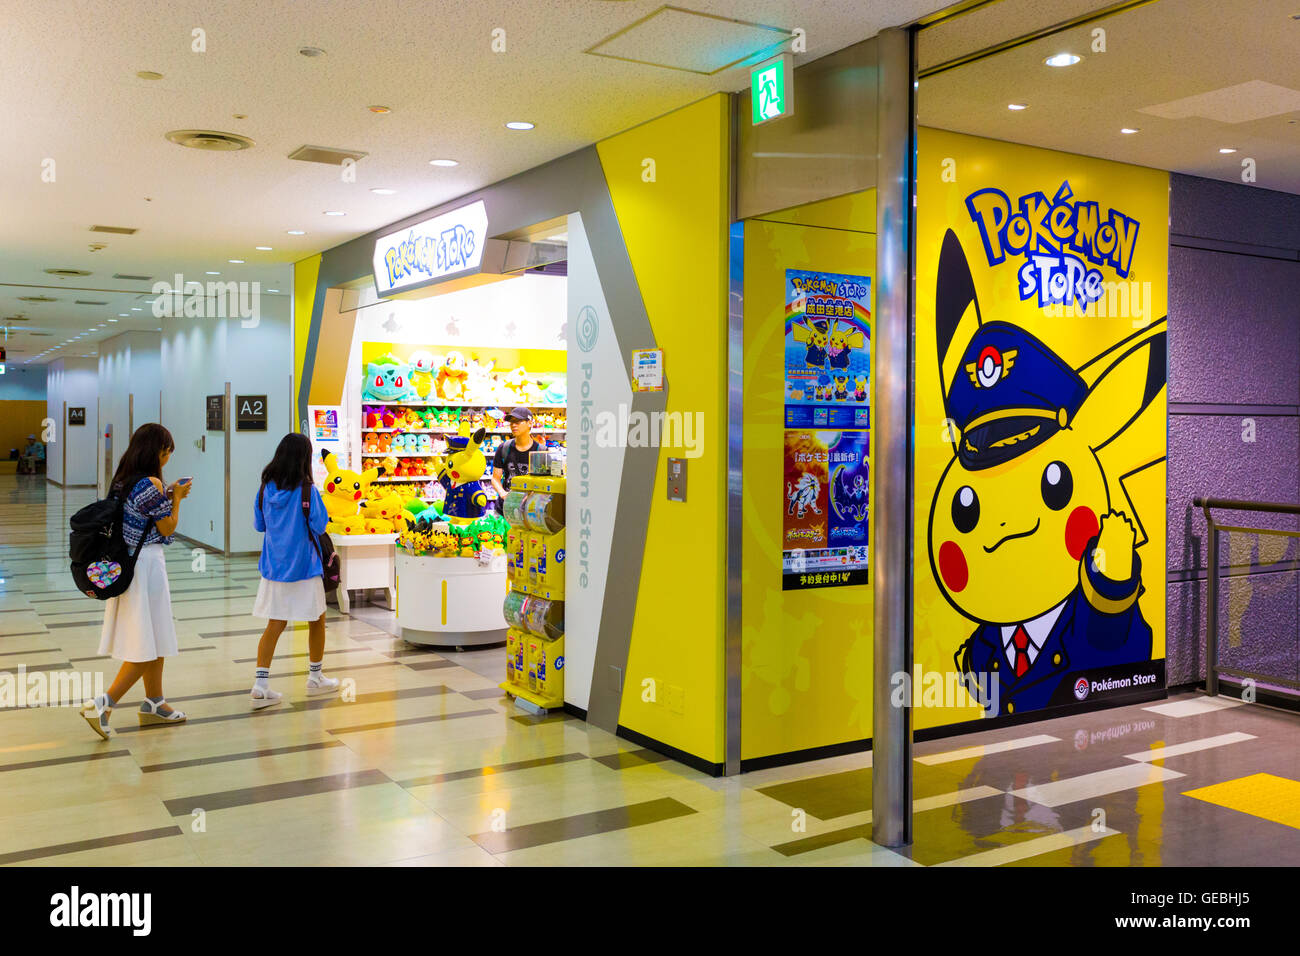 Pikachu Stuffed Dolls Greet Young Asian Girls Walking Into The Narita Airport Pokemon Store Entrance Vertical Stock Photo Alamy